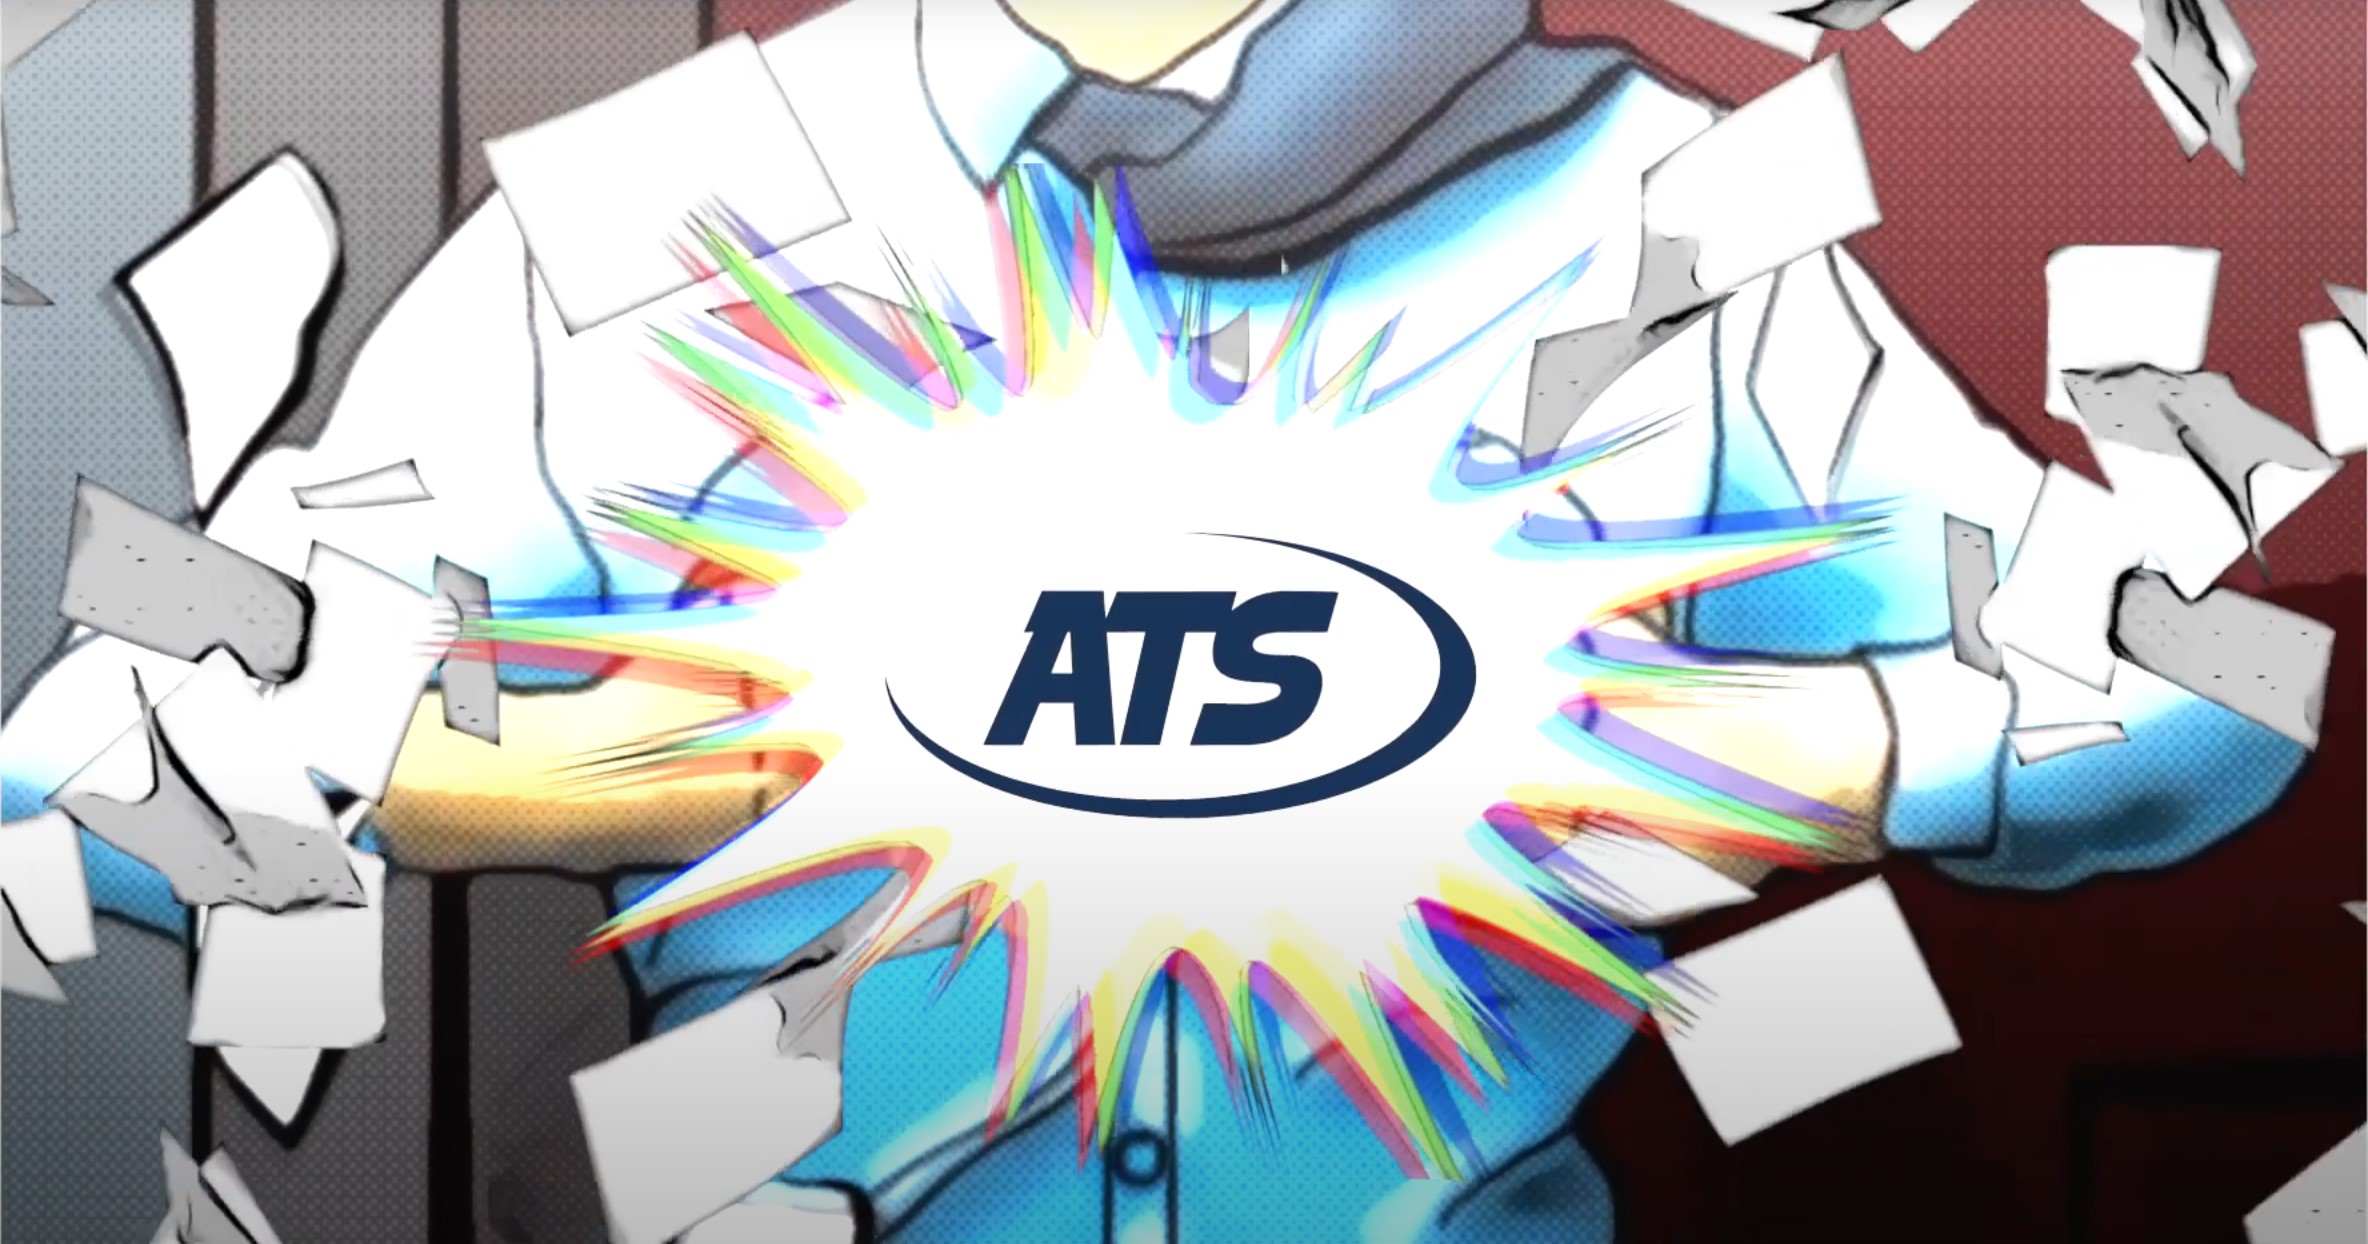 Stylized superhero opening their shirt to reveal the ATS logo beneath